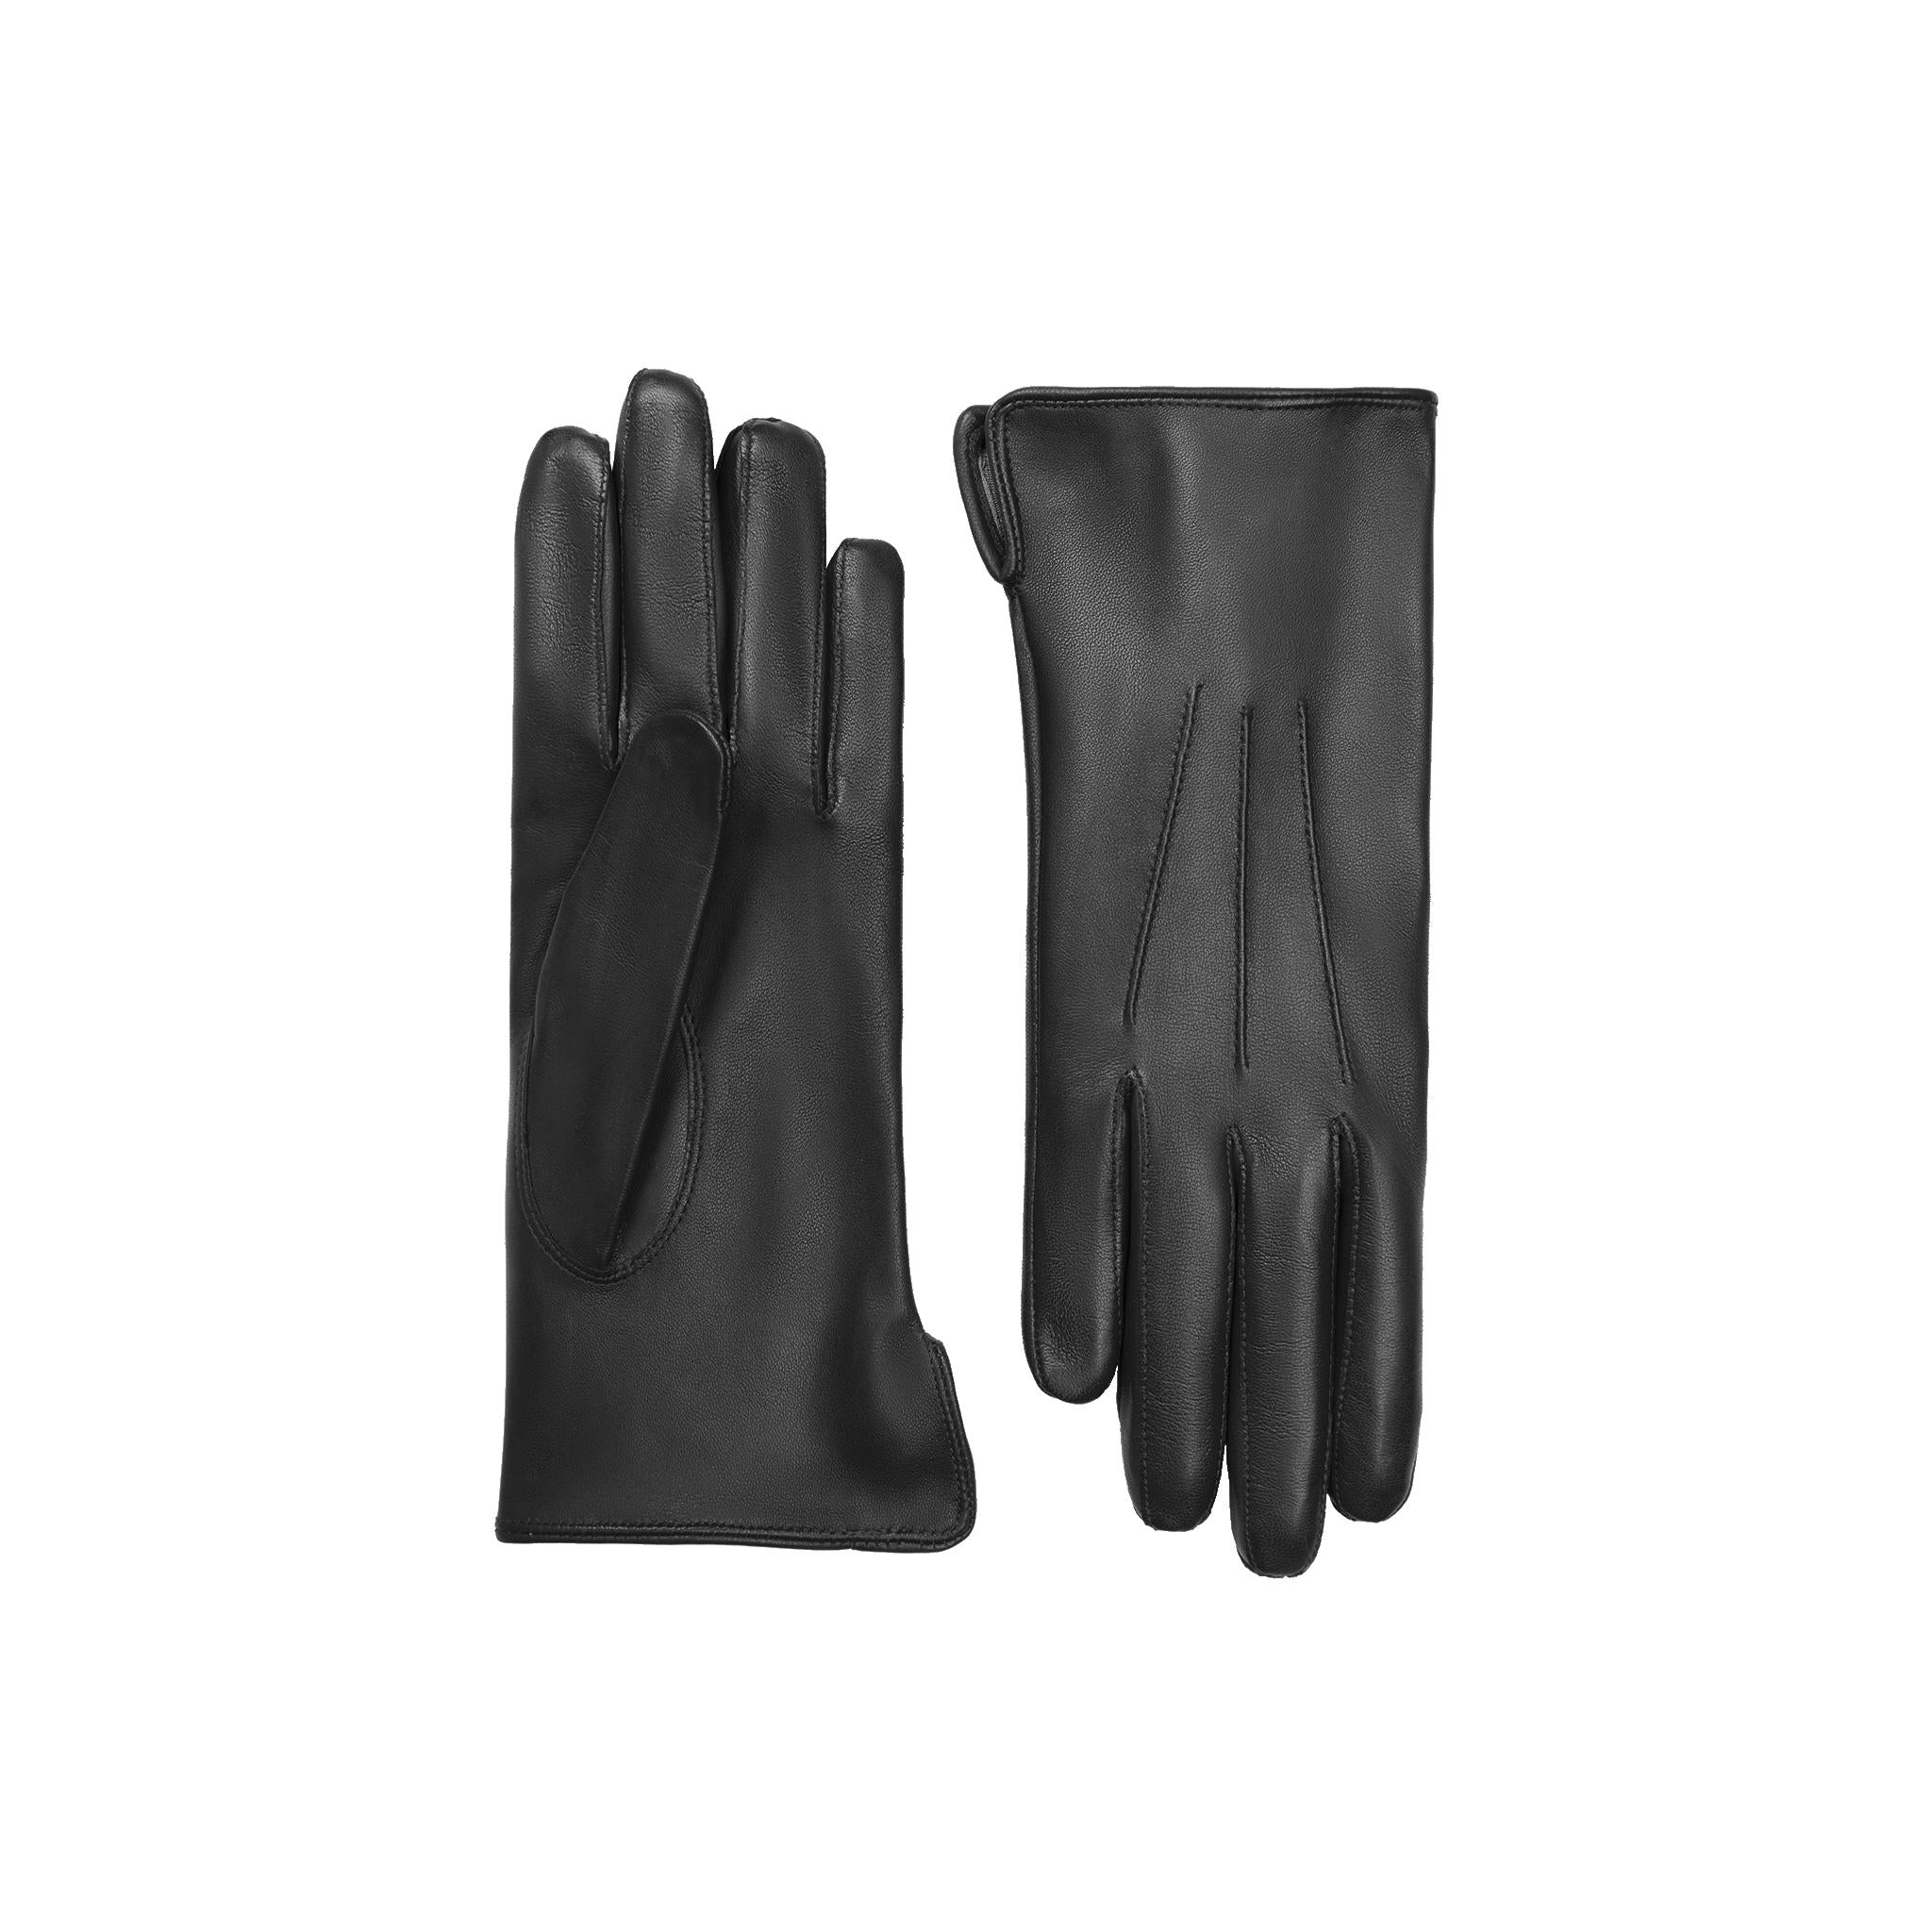 Cornelia James - Black Touchscreen Leather Gloves with Silk Lining - Aurelia - Size Large (8½) - Handmade Leather Gloves by Cornelia James